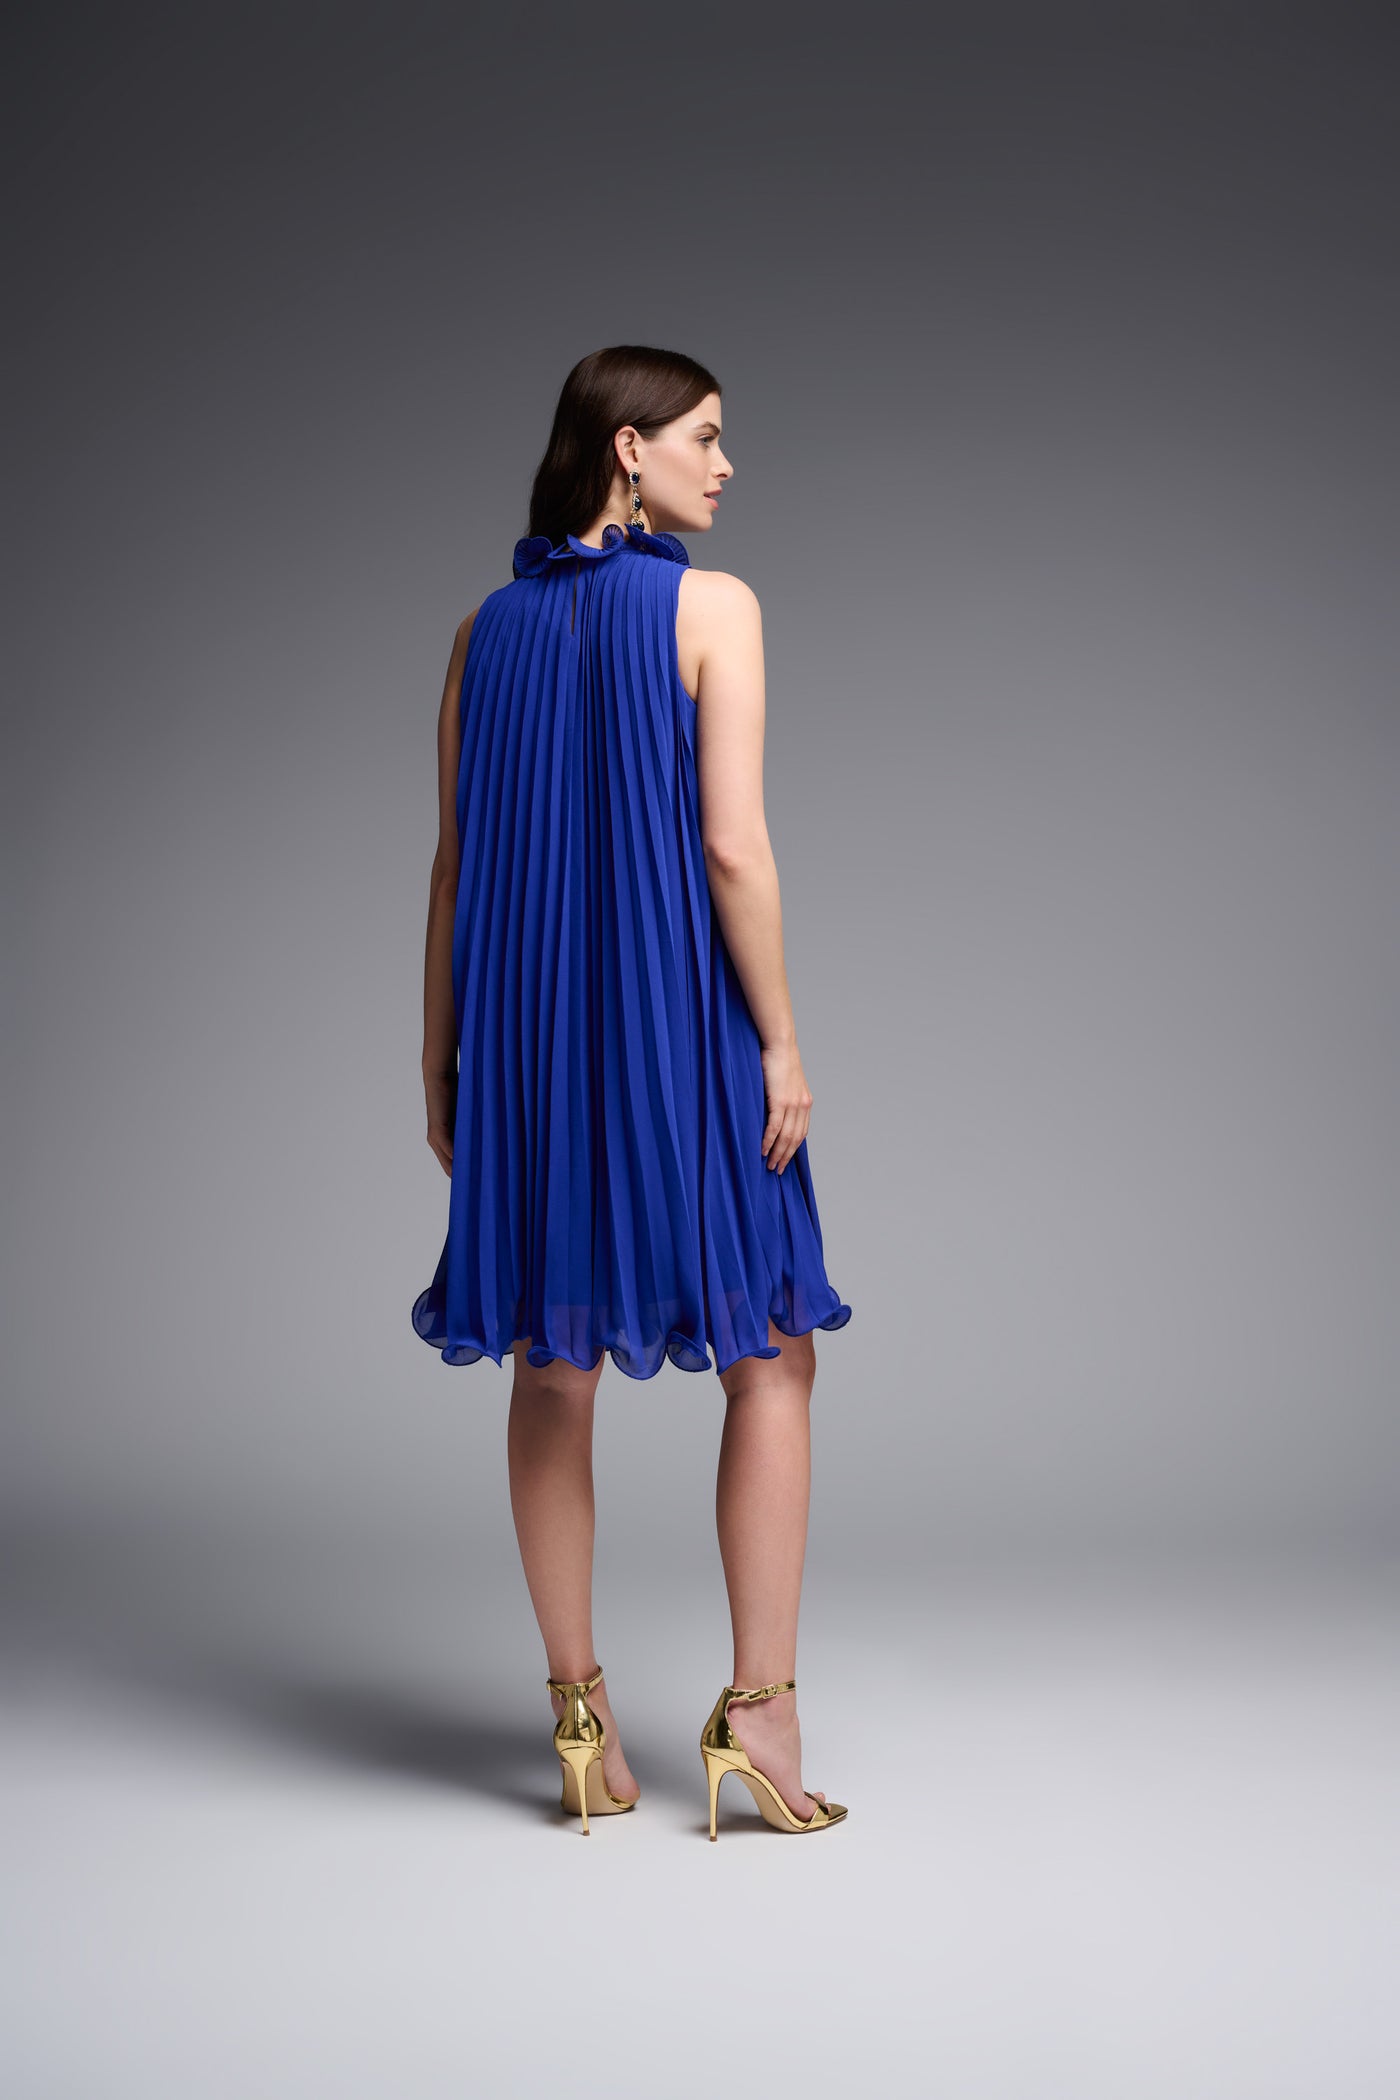 Joseph Ribkoff Dress Style 231730R